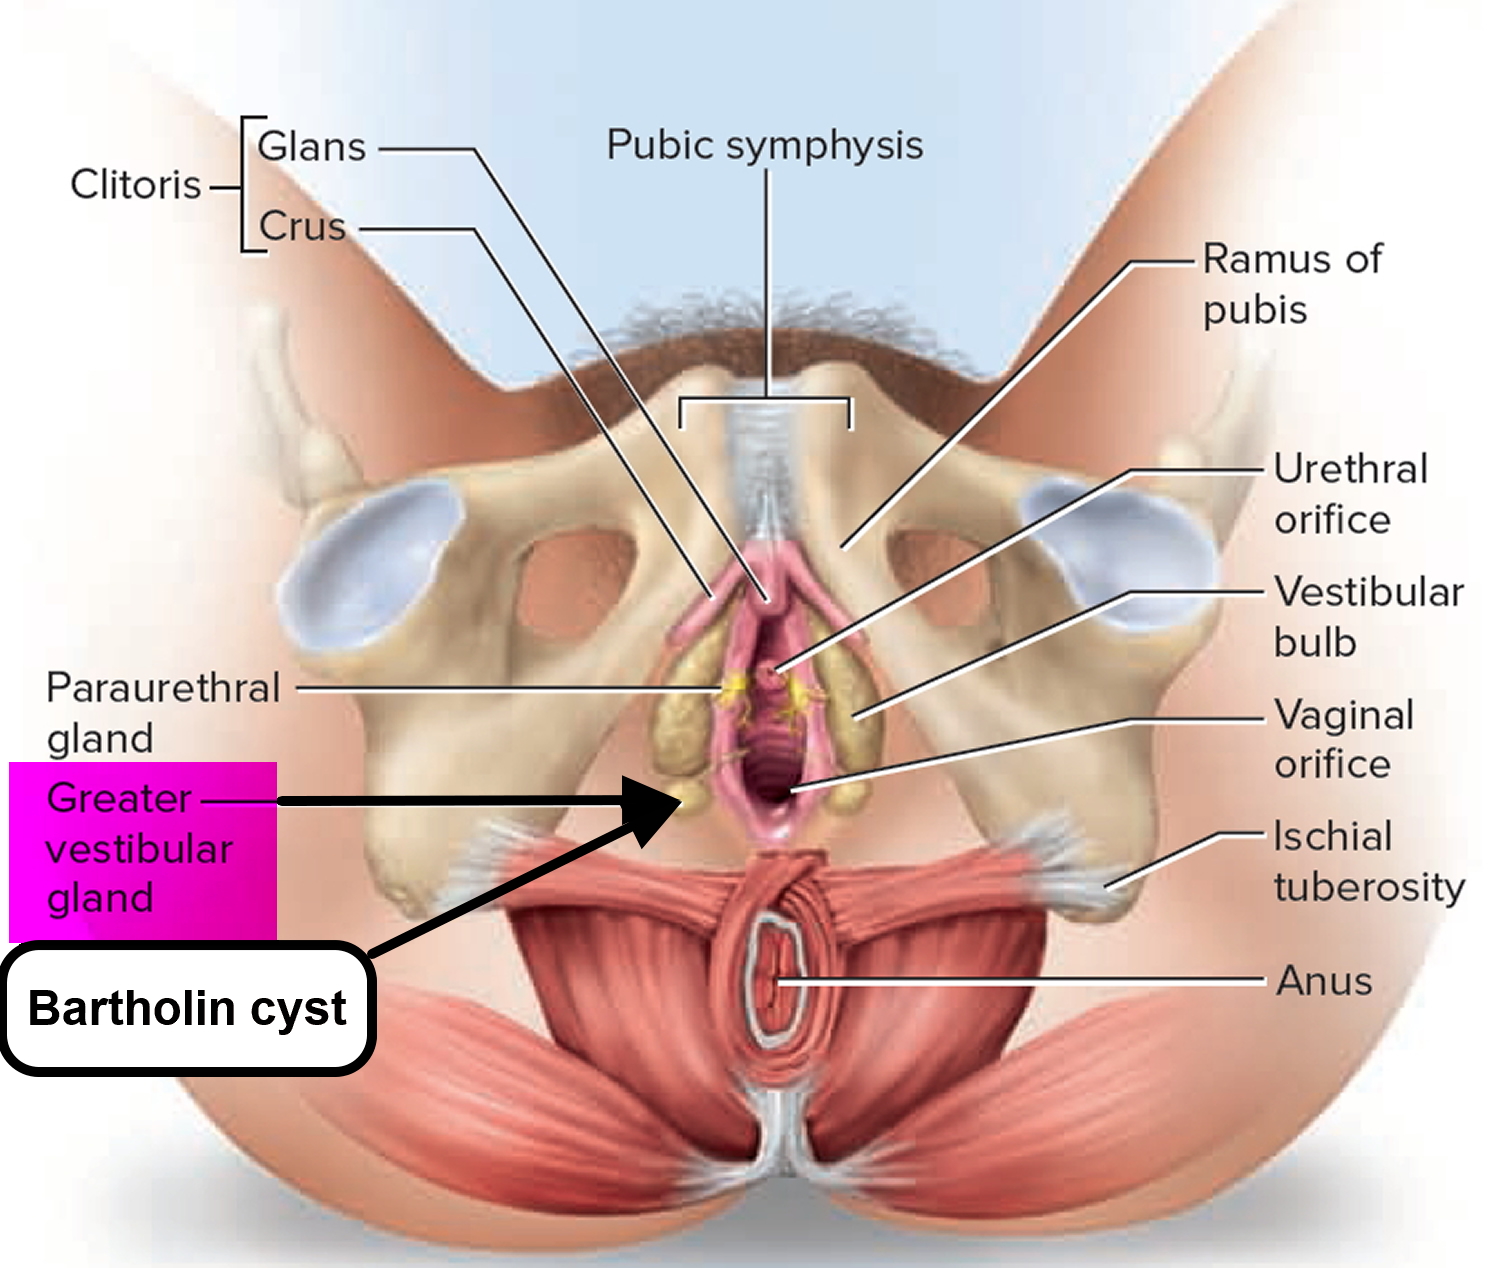 Cyst bartholin Symptoms and